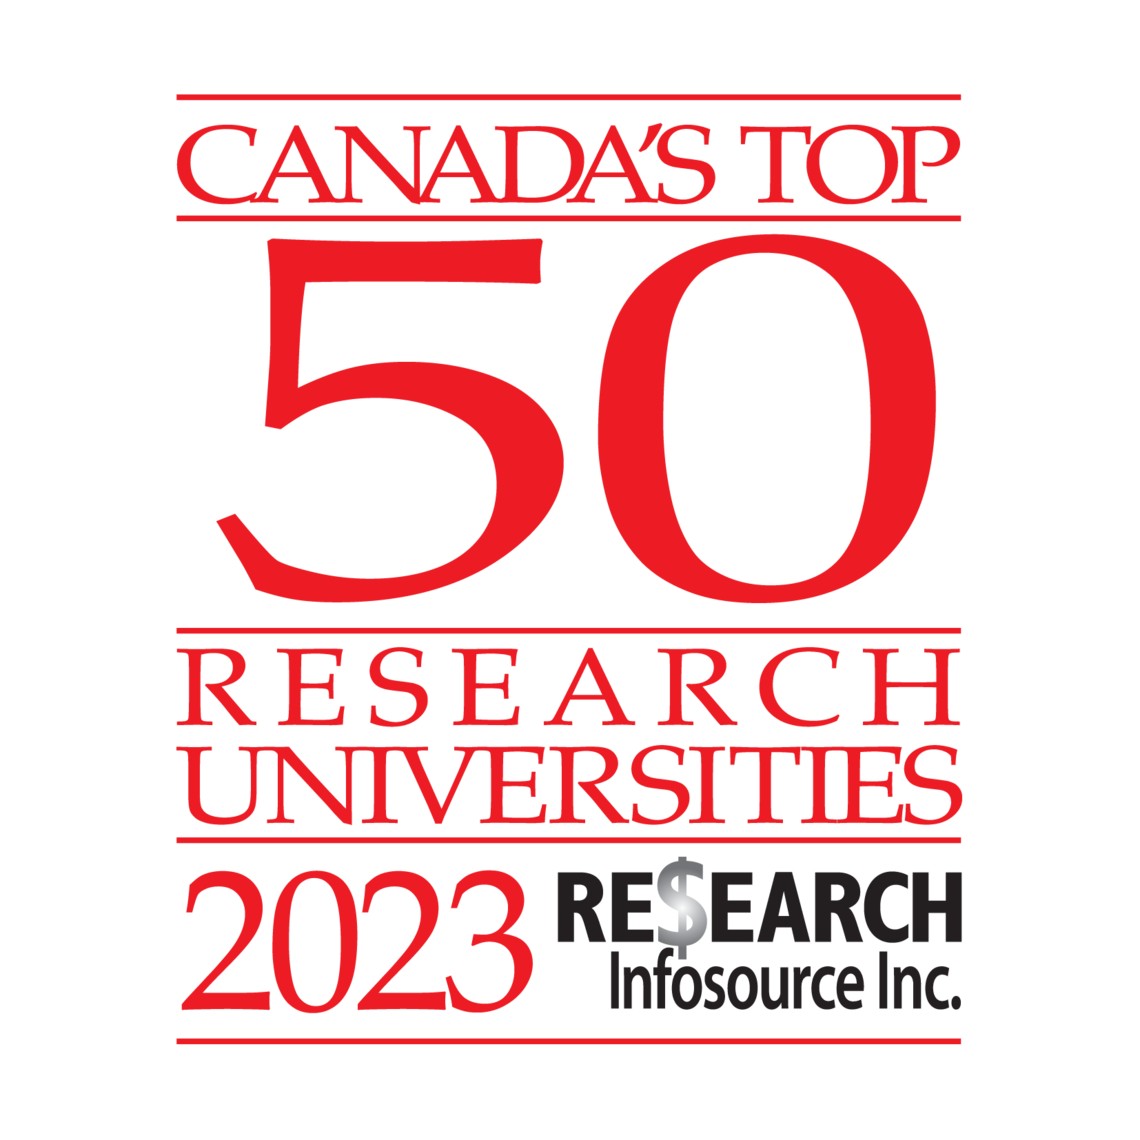 Canada's Top 50 Research Universities 2023 logo